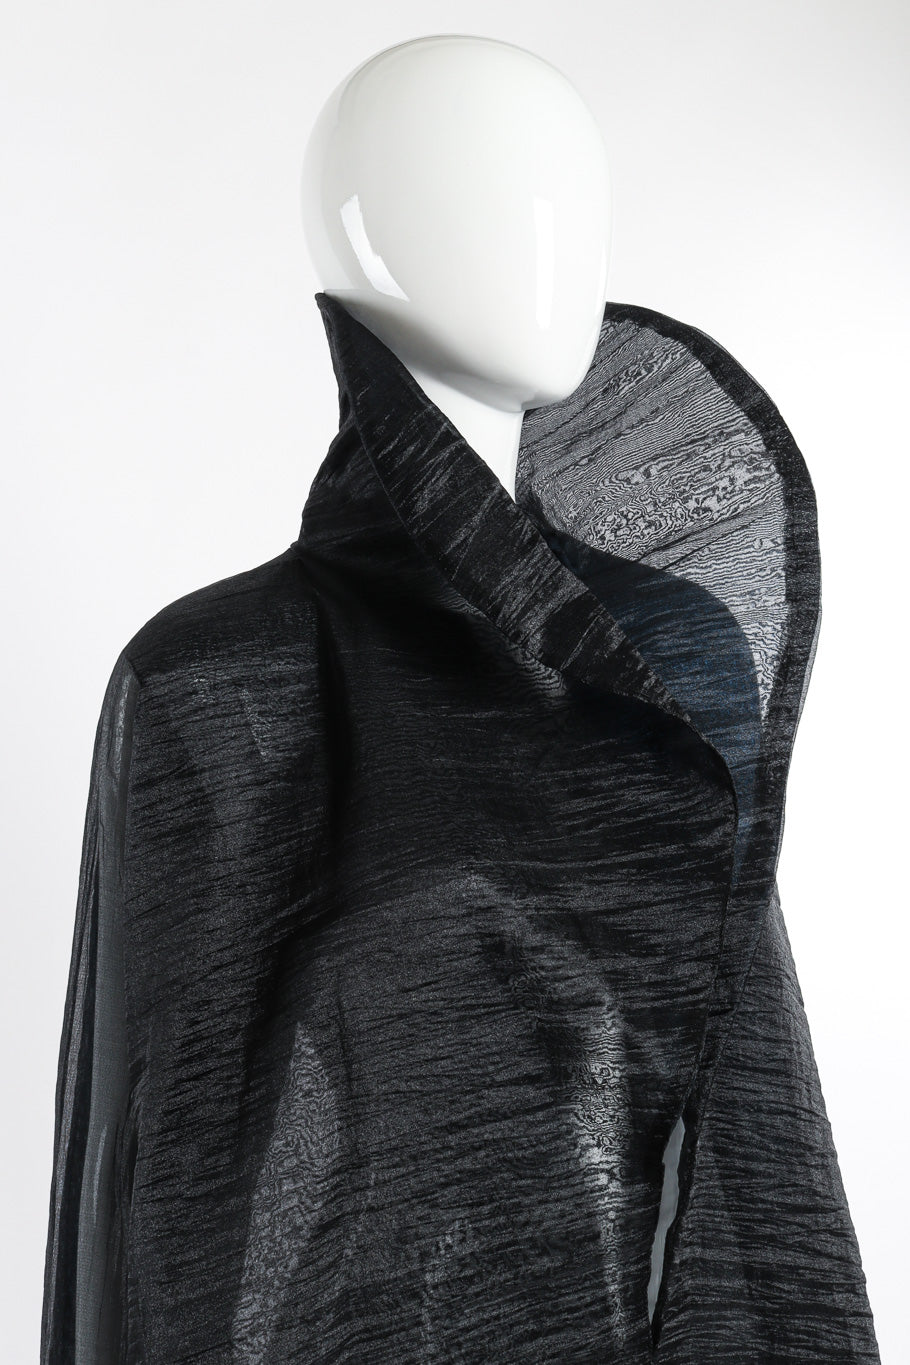 Silk duster by Donna Karan on mannequin collar up front @recessla